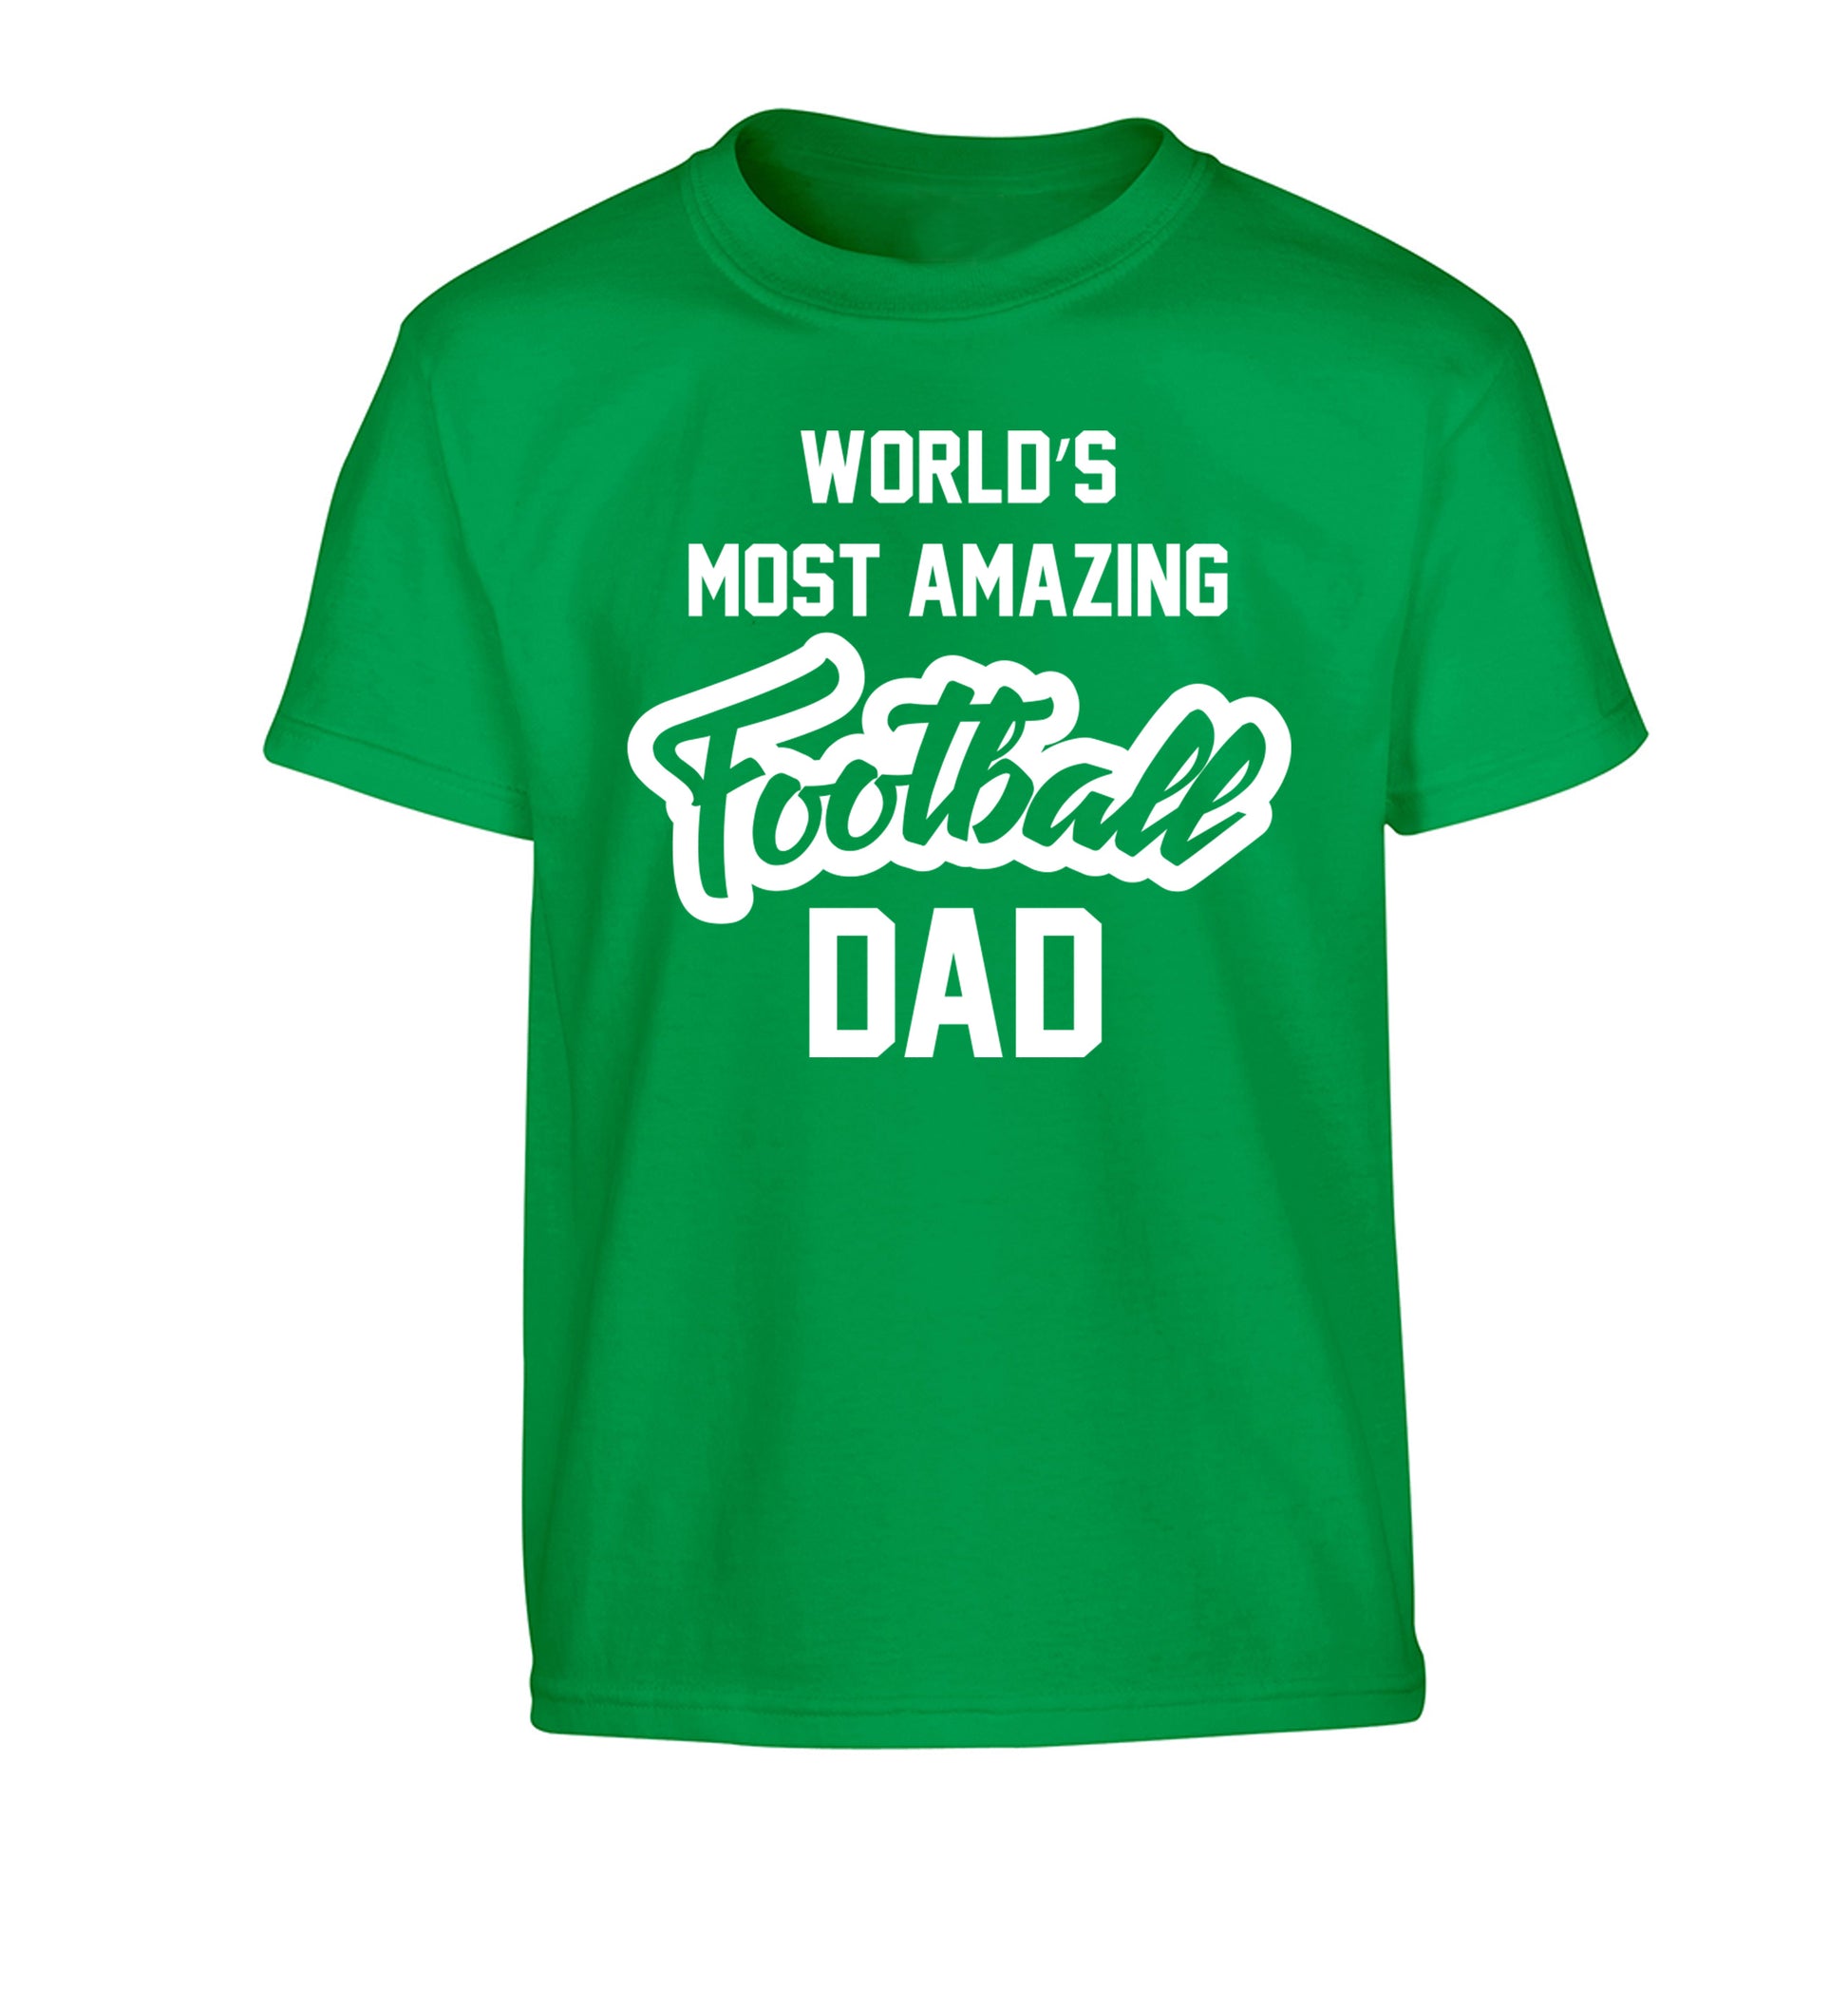 Worlds most amazing football dad Children's green Tshirt 12-14 Years